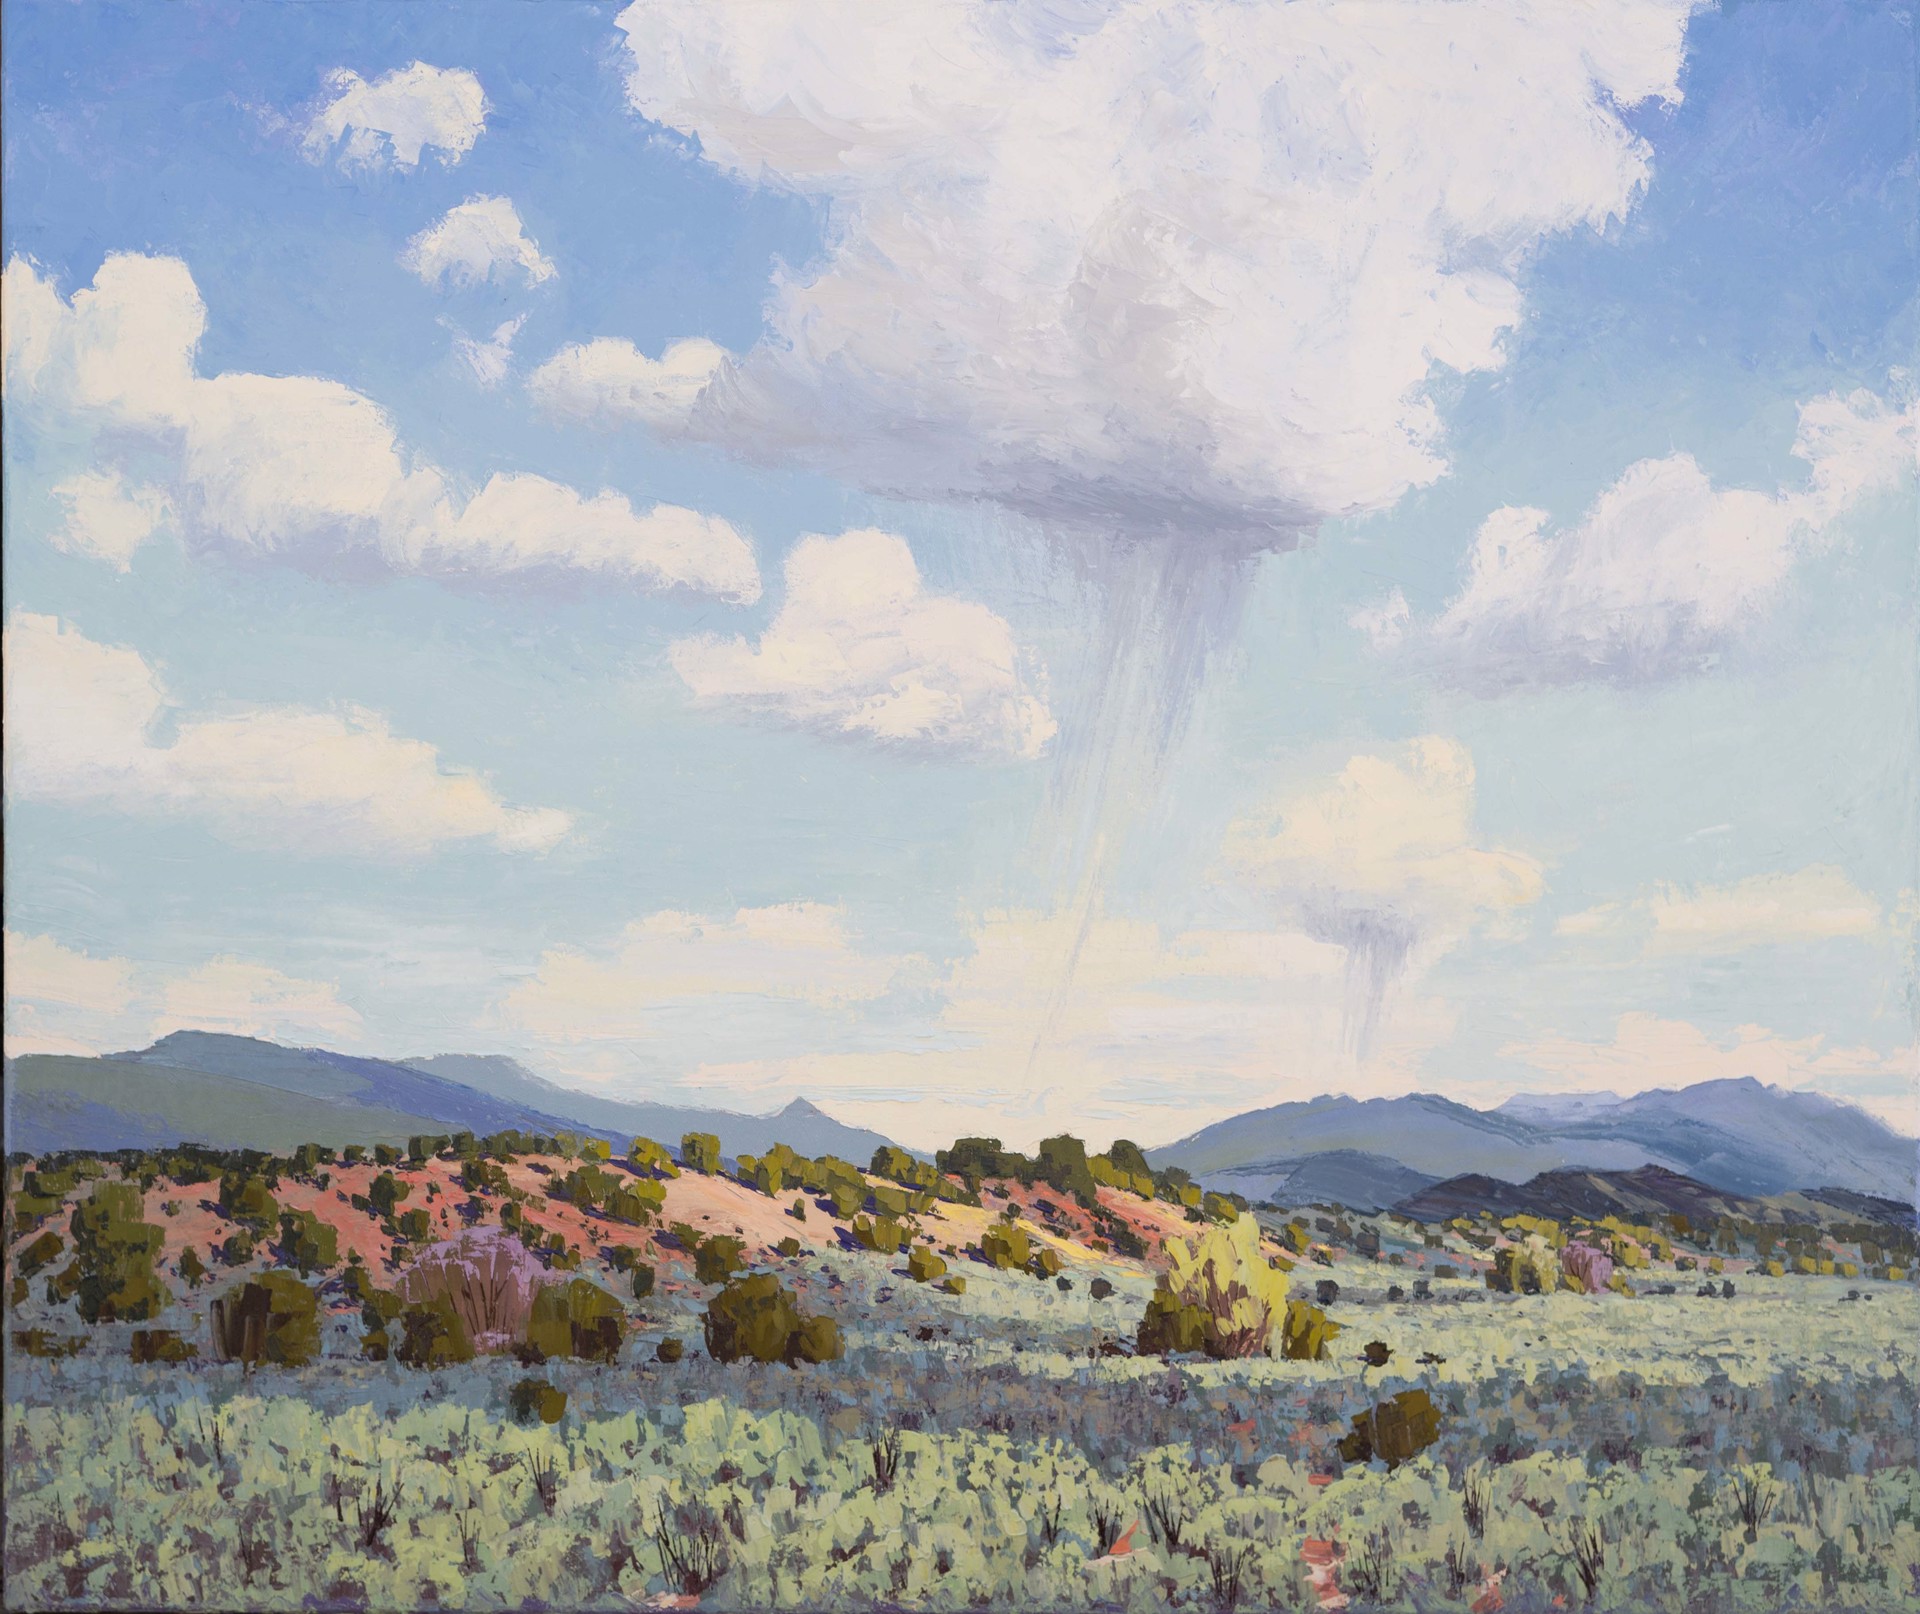 Virga on Taos Mesa by Ken Daggett